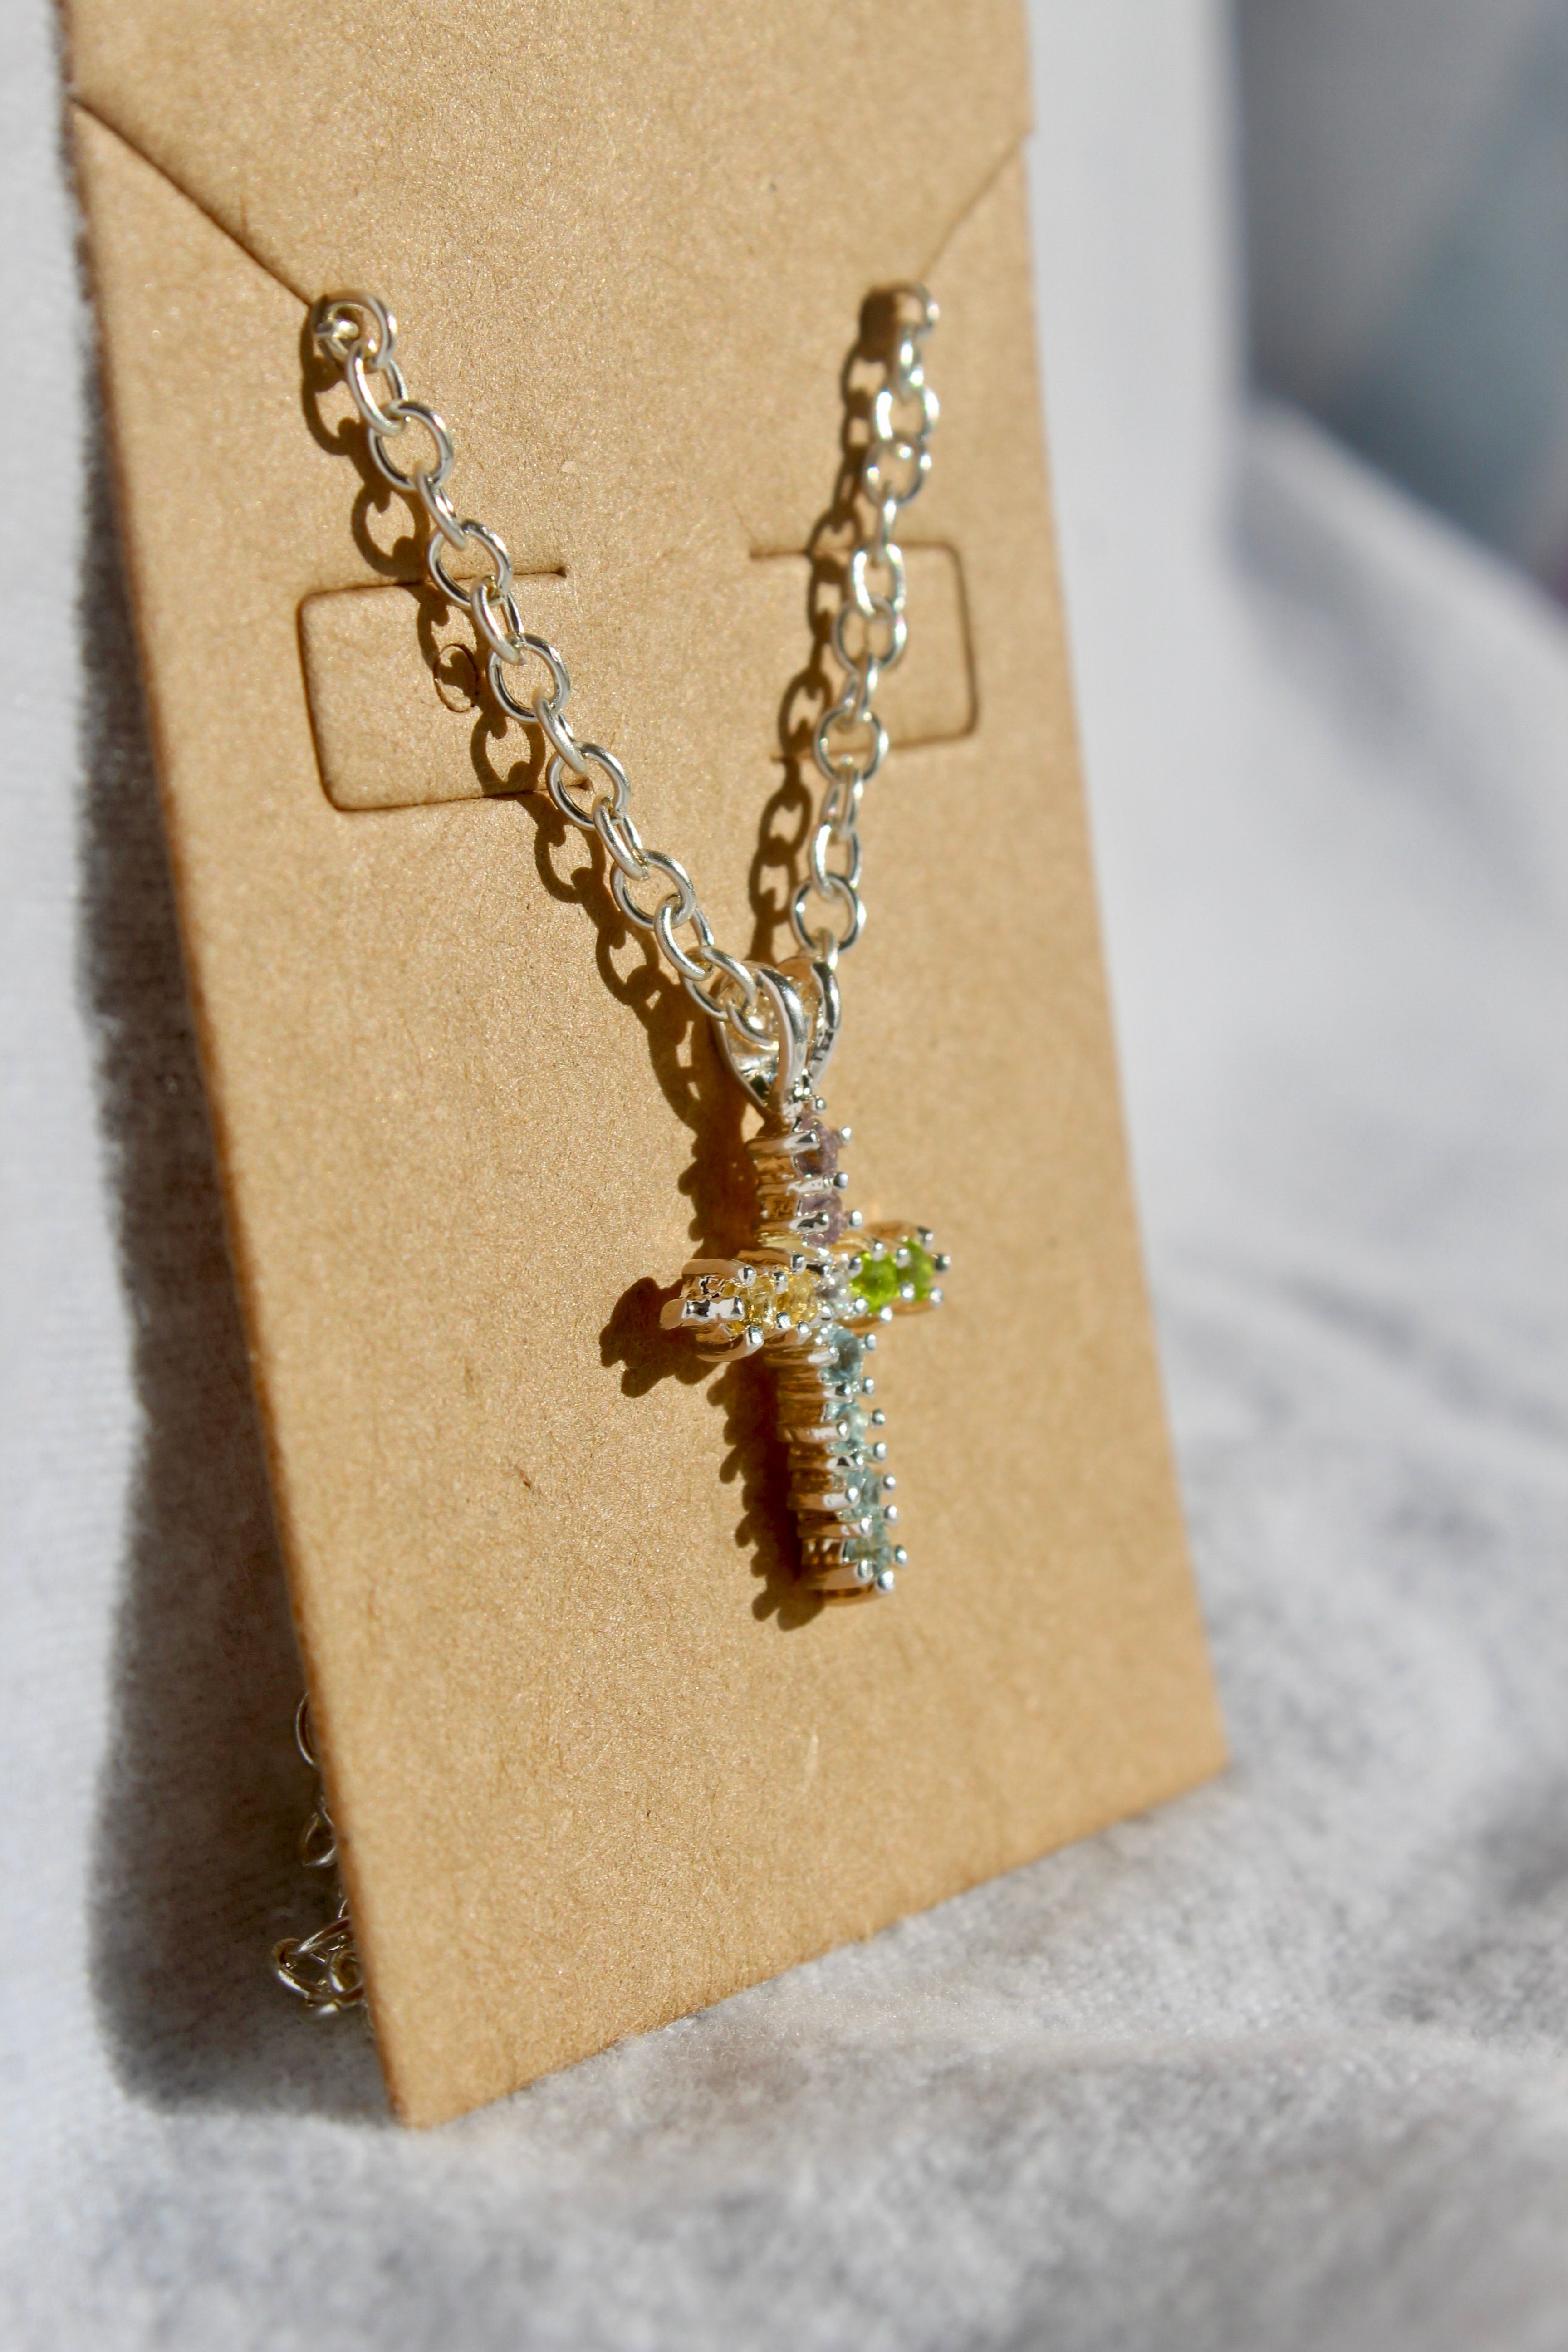 Rhinestone Cross Pendant Chain Necklace - Spiritual Collection